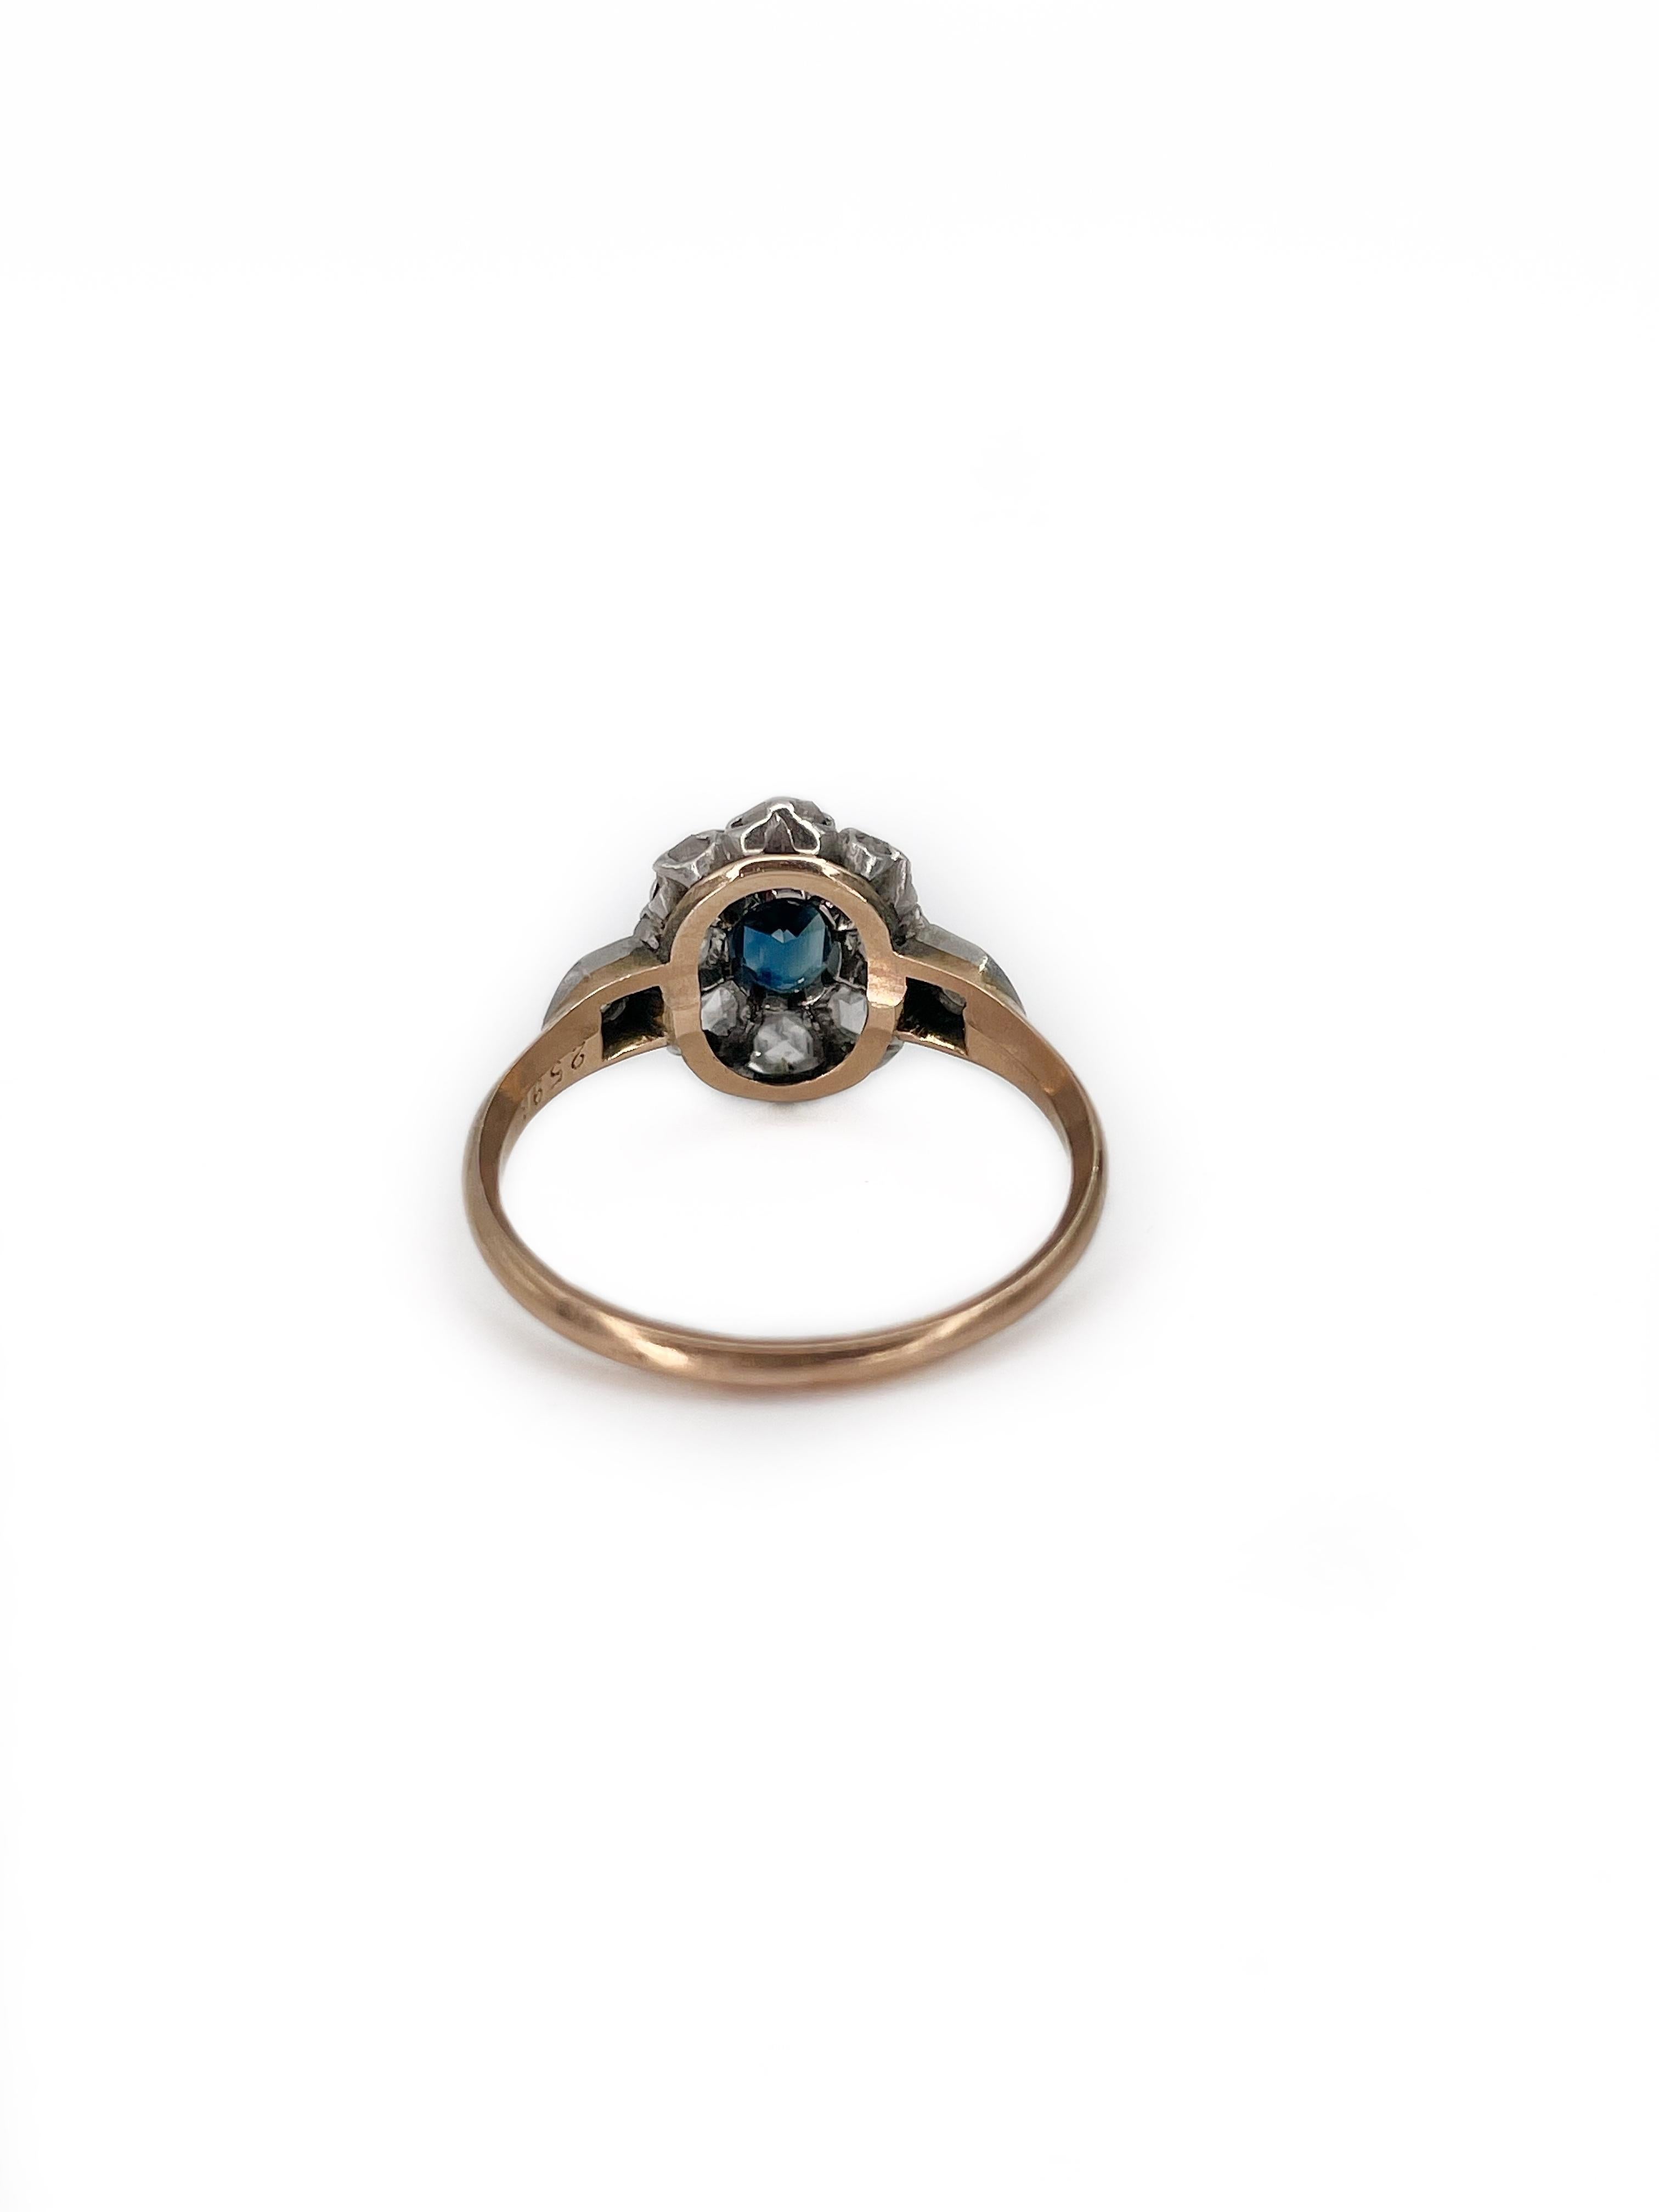 Women's Antique Victorian 18 Karat Gold Sapphire Rose Cut Diamond Cluster Ring